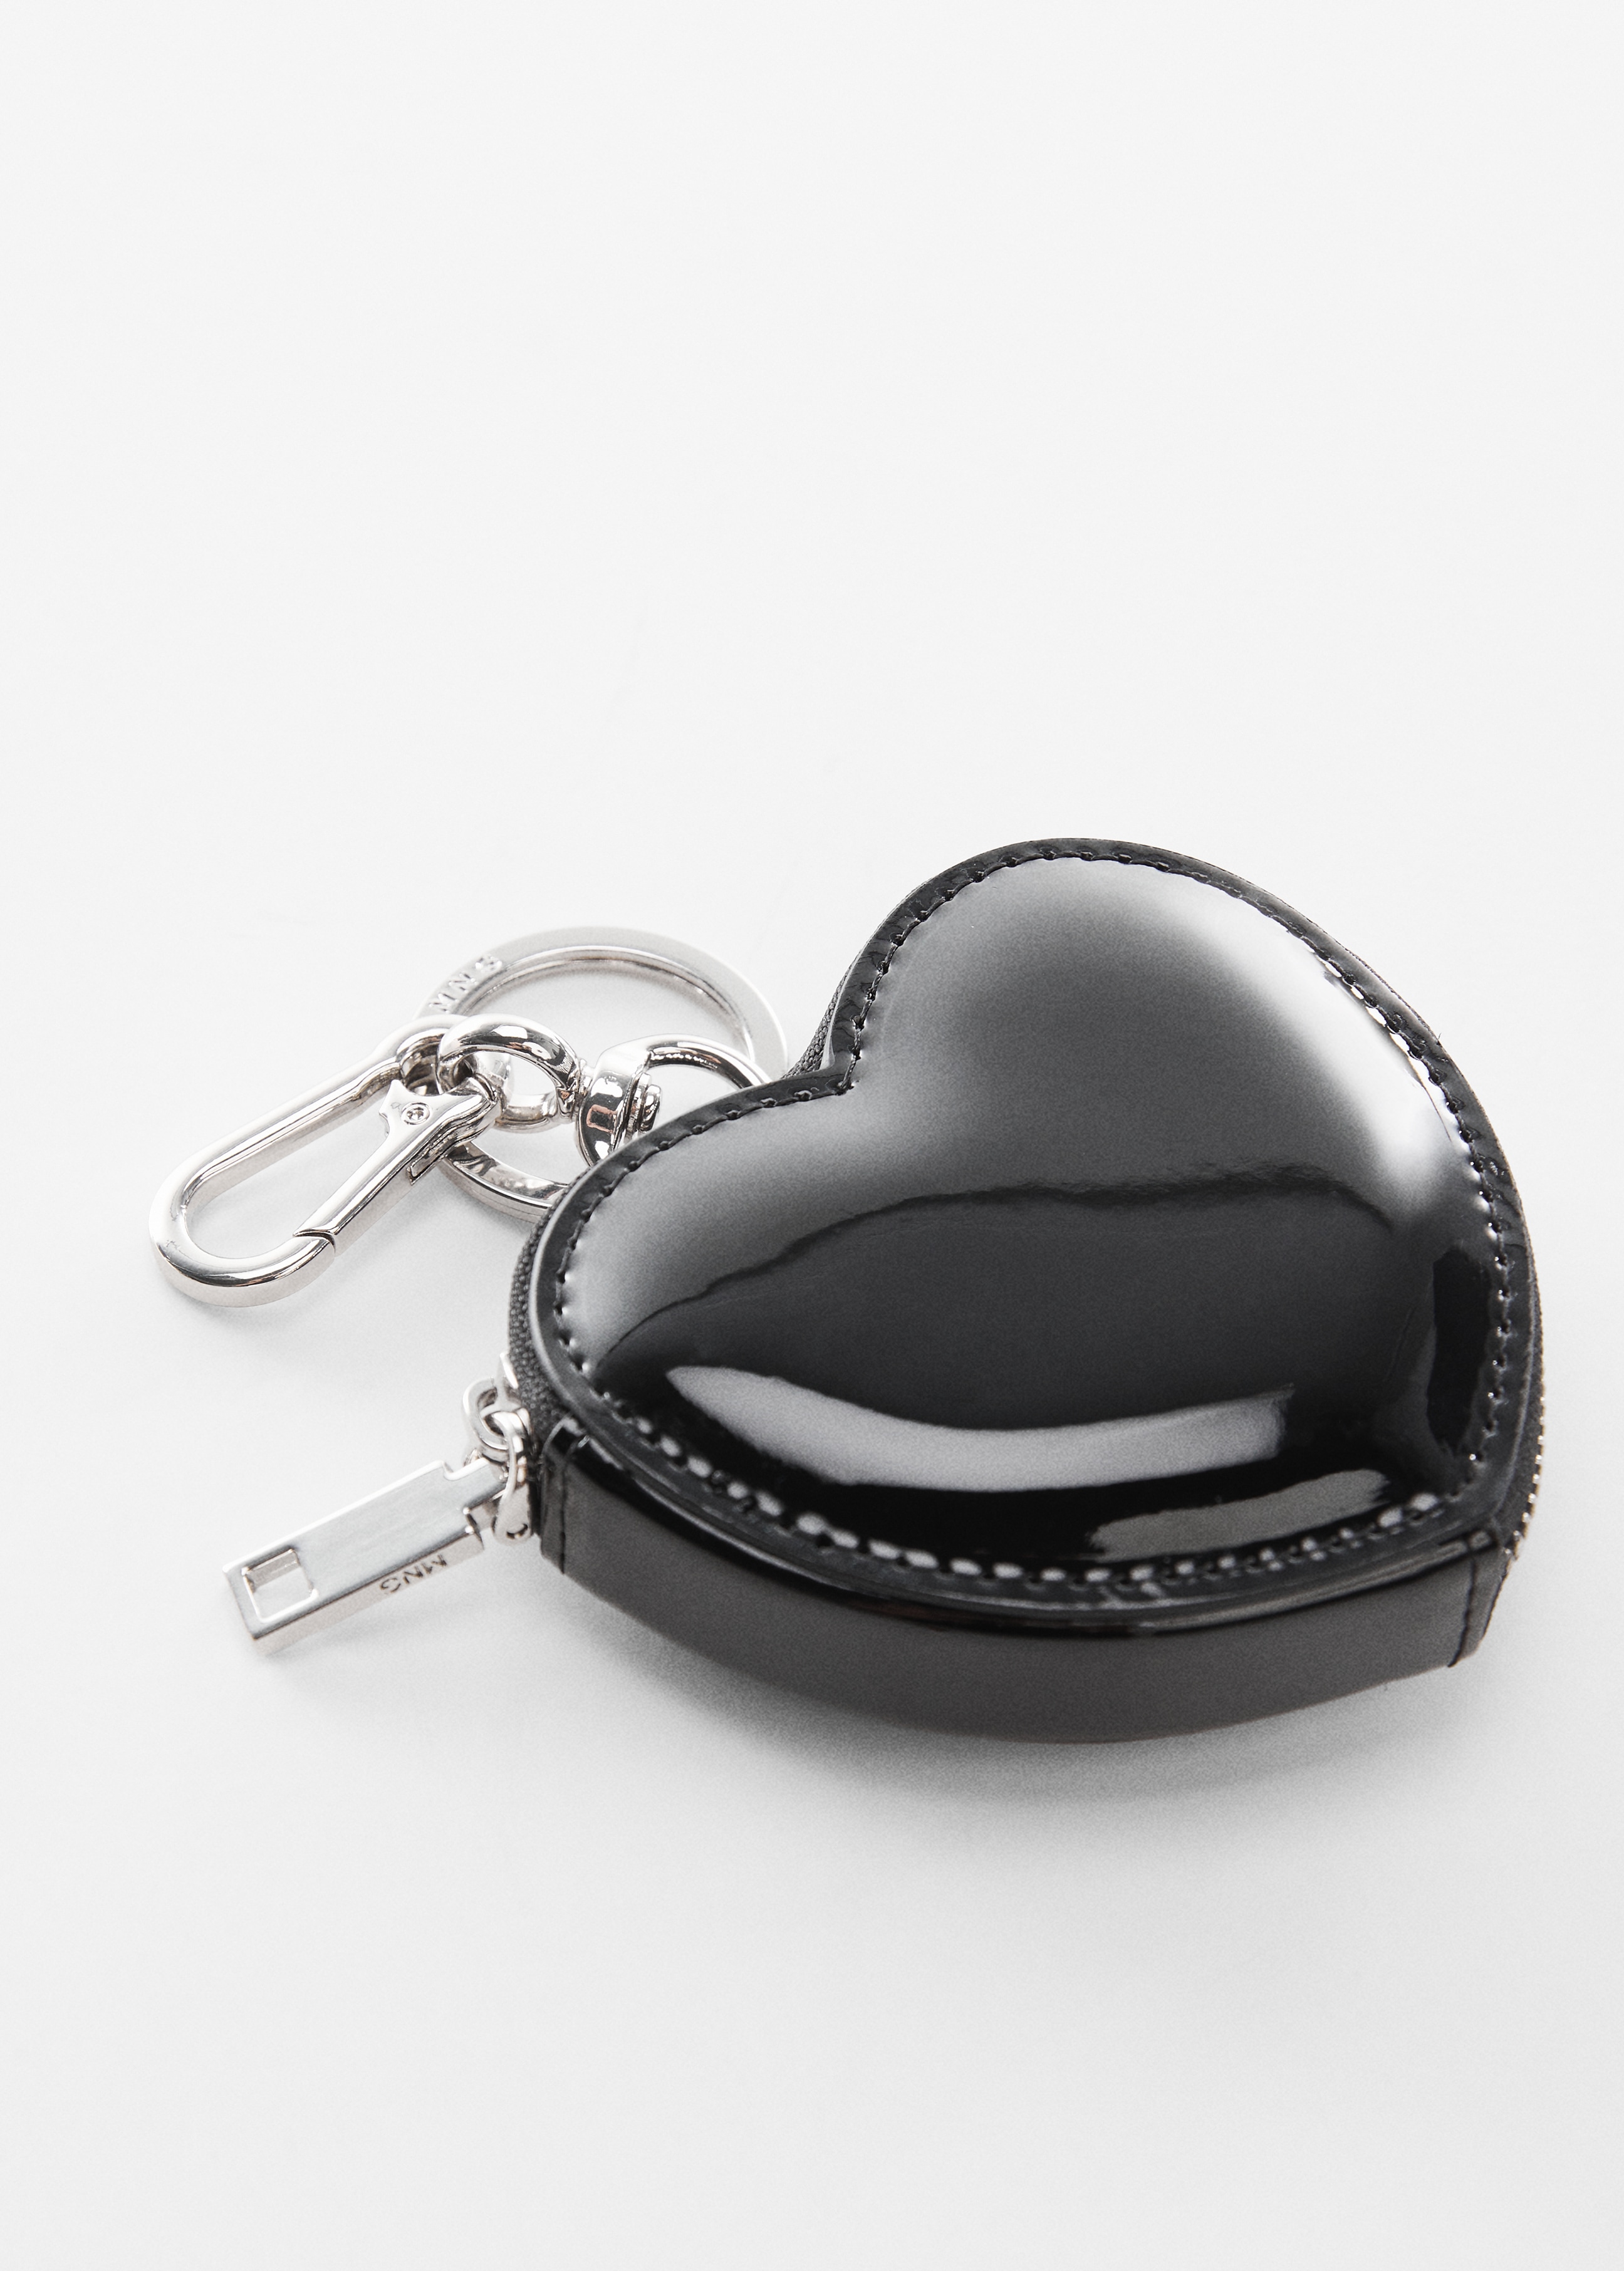 Wallet with heart keychain  - Medium plane